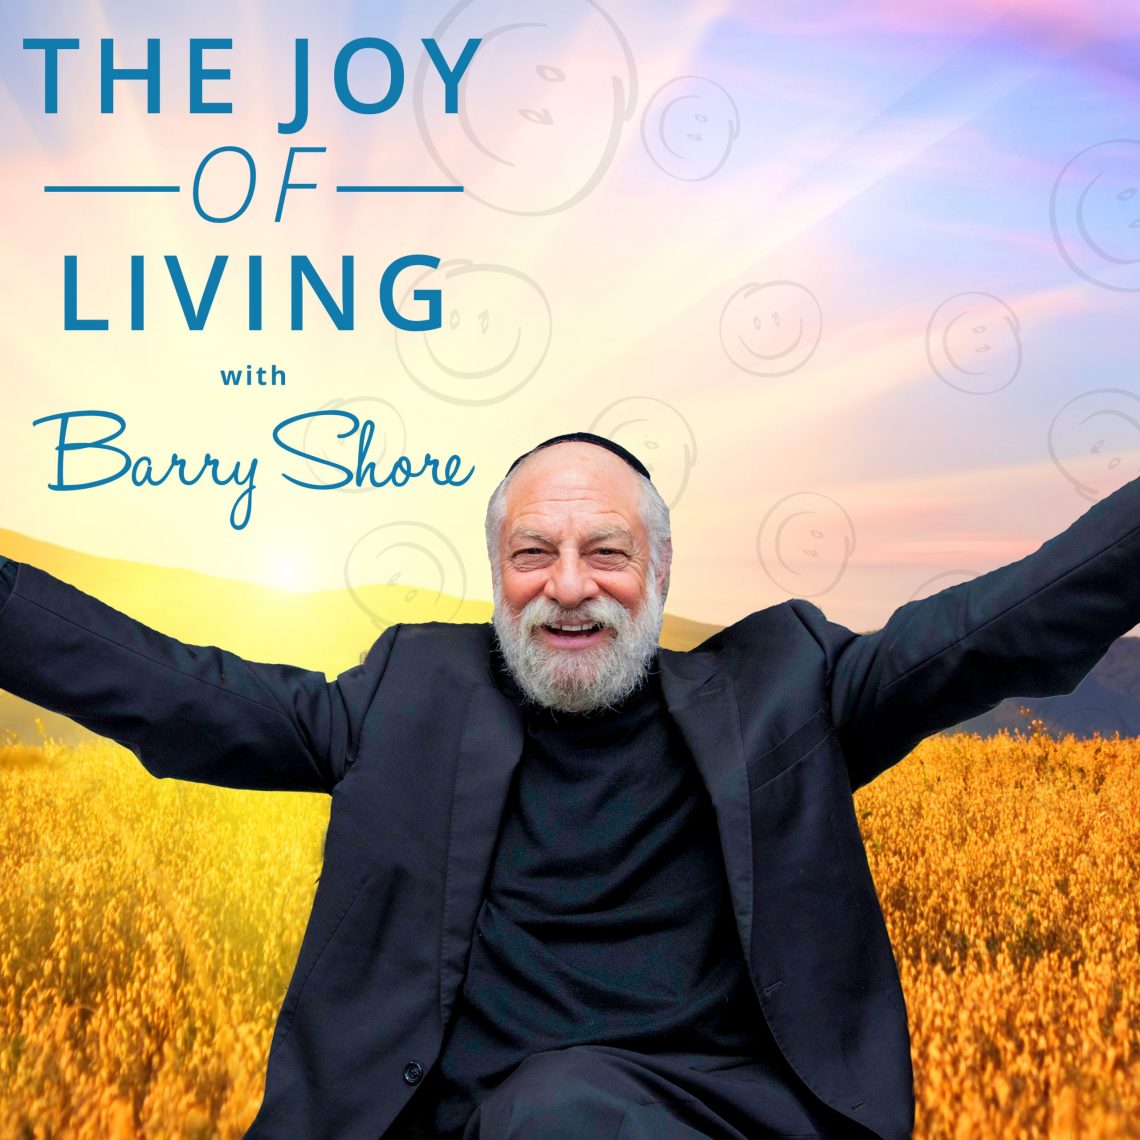 Barry Shore – Ambassador of JOY